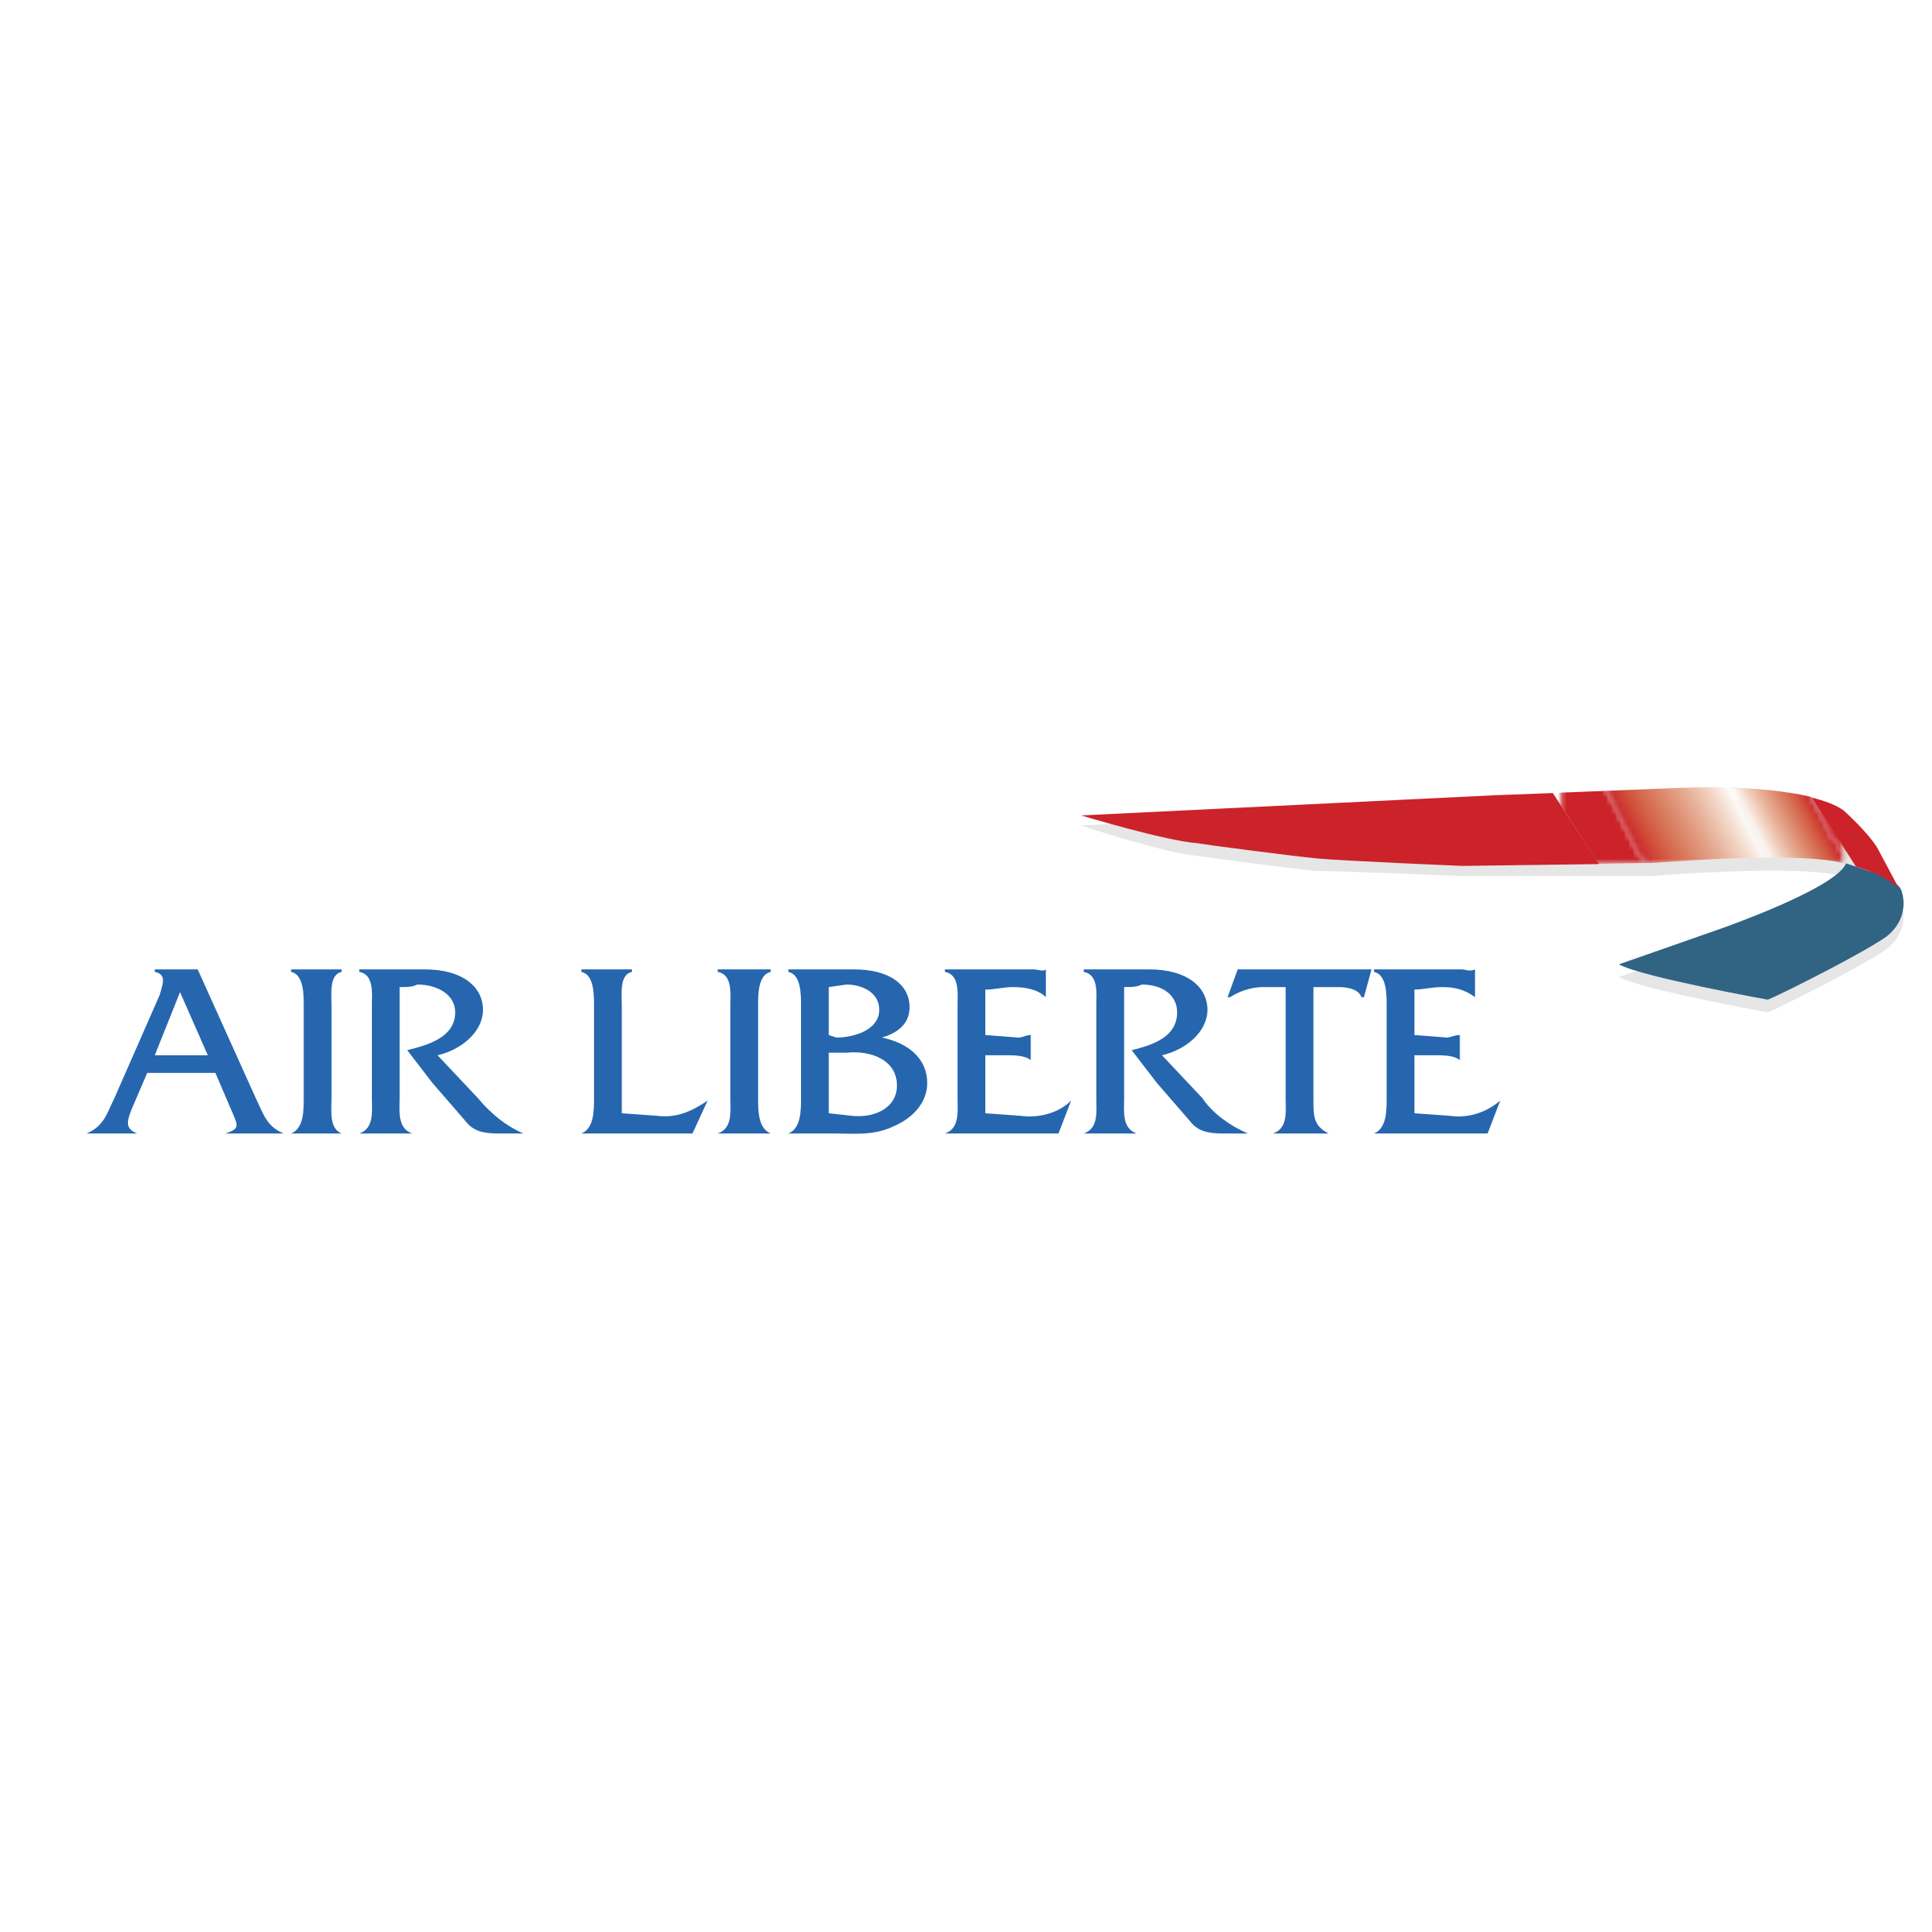 Liberte Logo - Air Liberte Logo PNG Transparent & SVG Vector